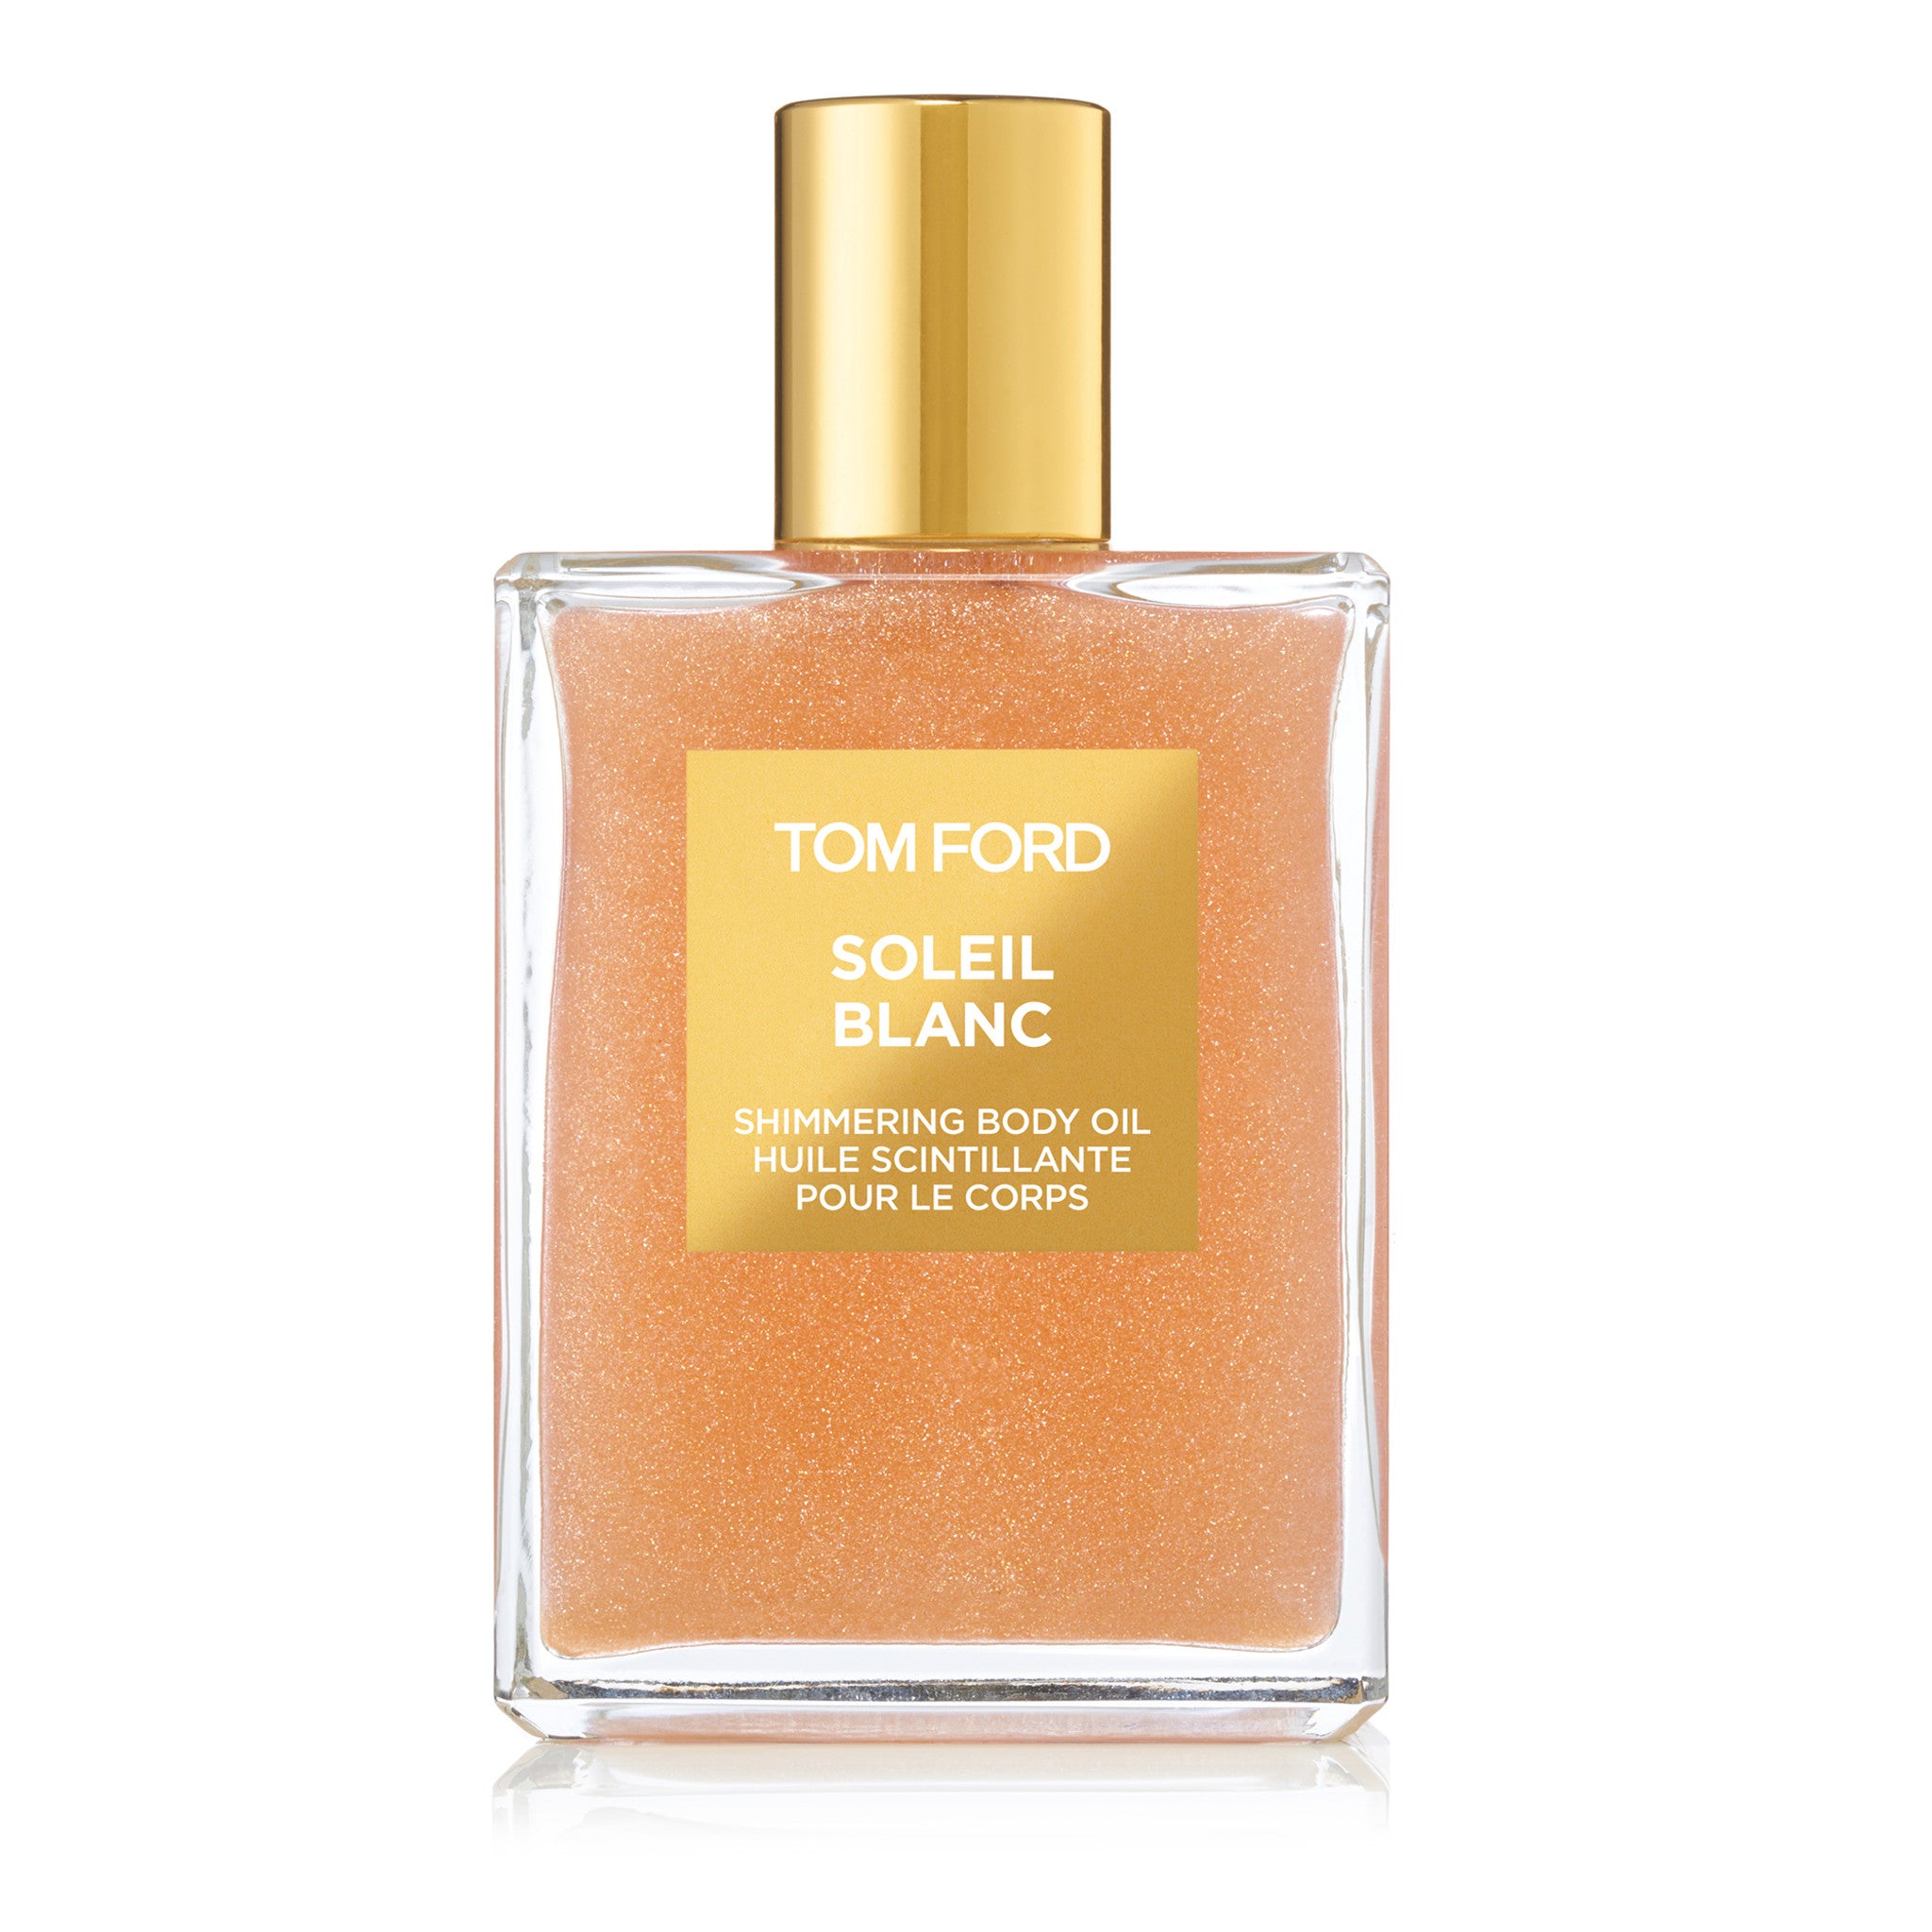 Tom Ford Rose Gold Soleil Blanc Shimmering Body Oil In Default Title